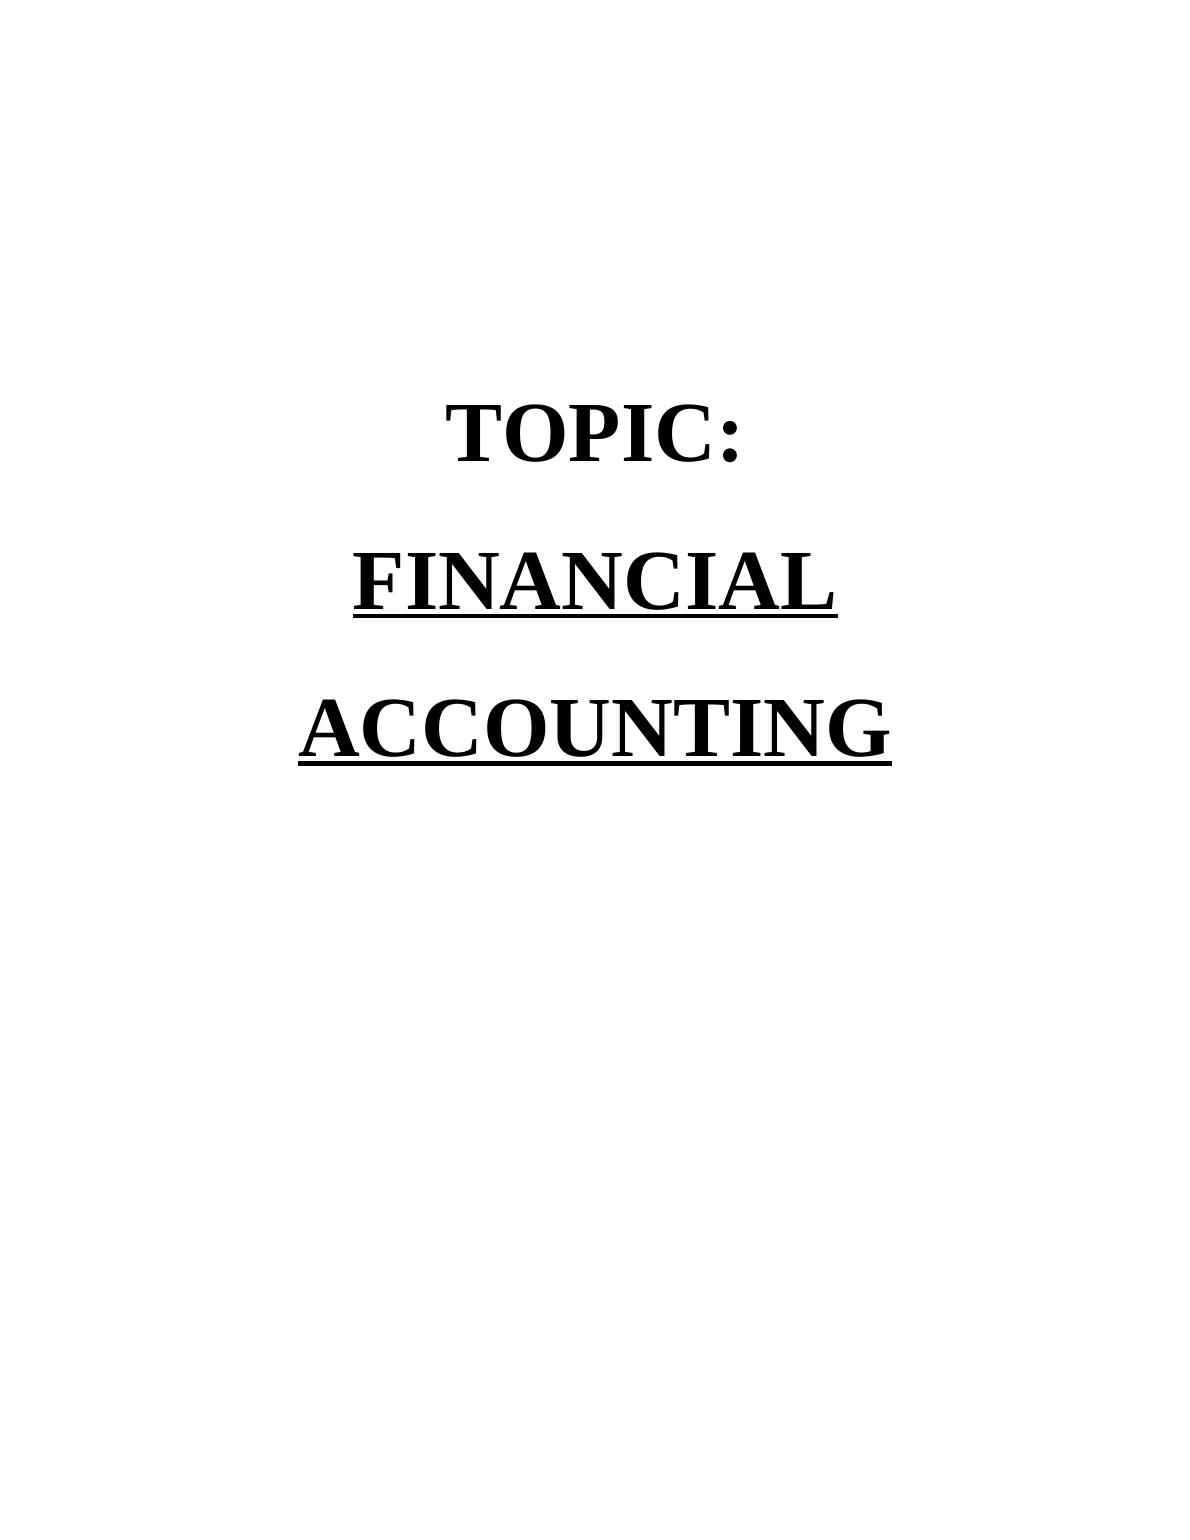 Financial Accounting |  Explanation_1